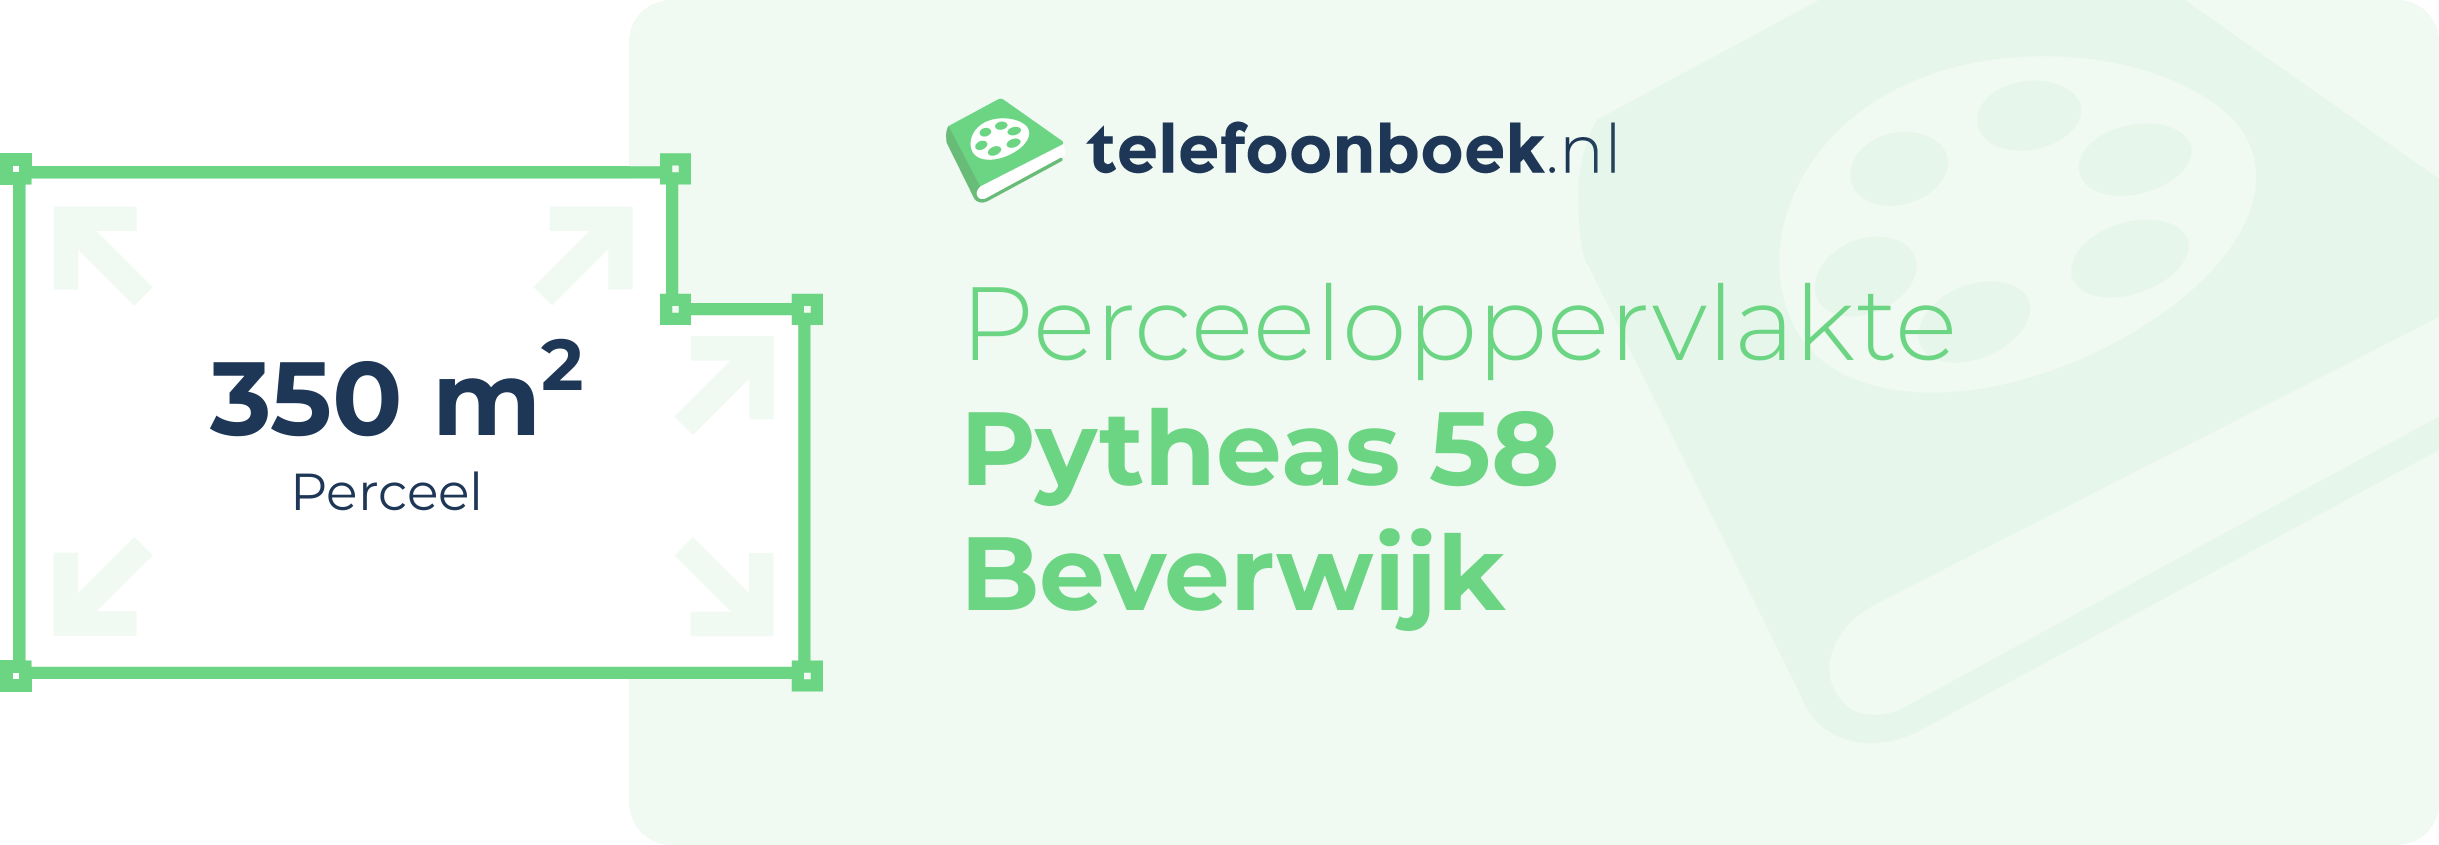 Perceeloppervlakte Pytheas 58 Beverwijk